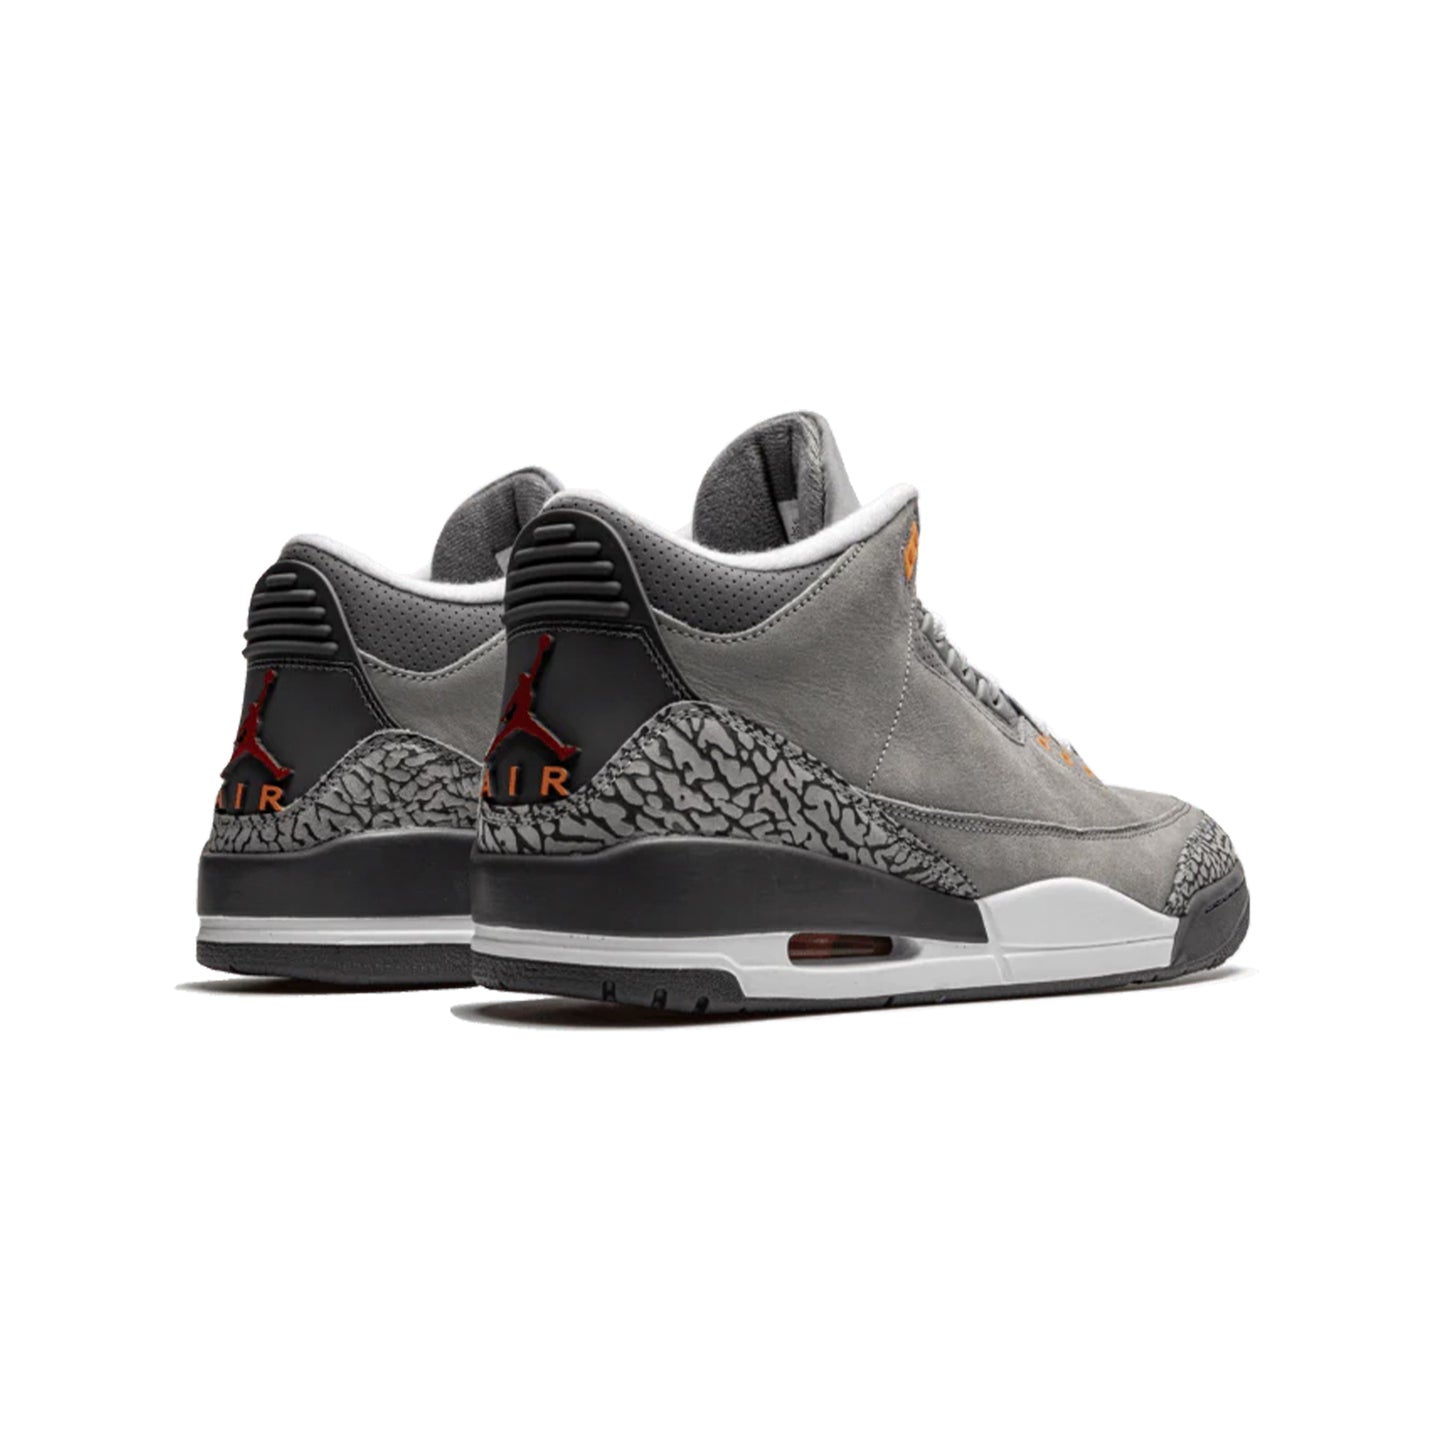 Jordan 3 Retro Cool Grey